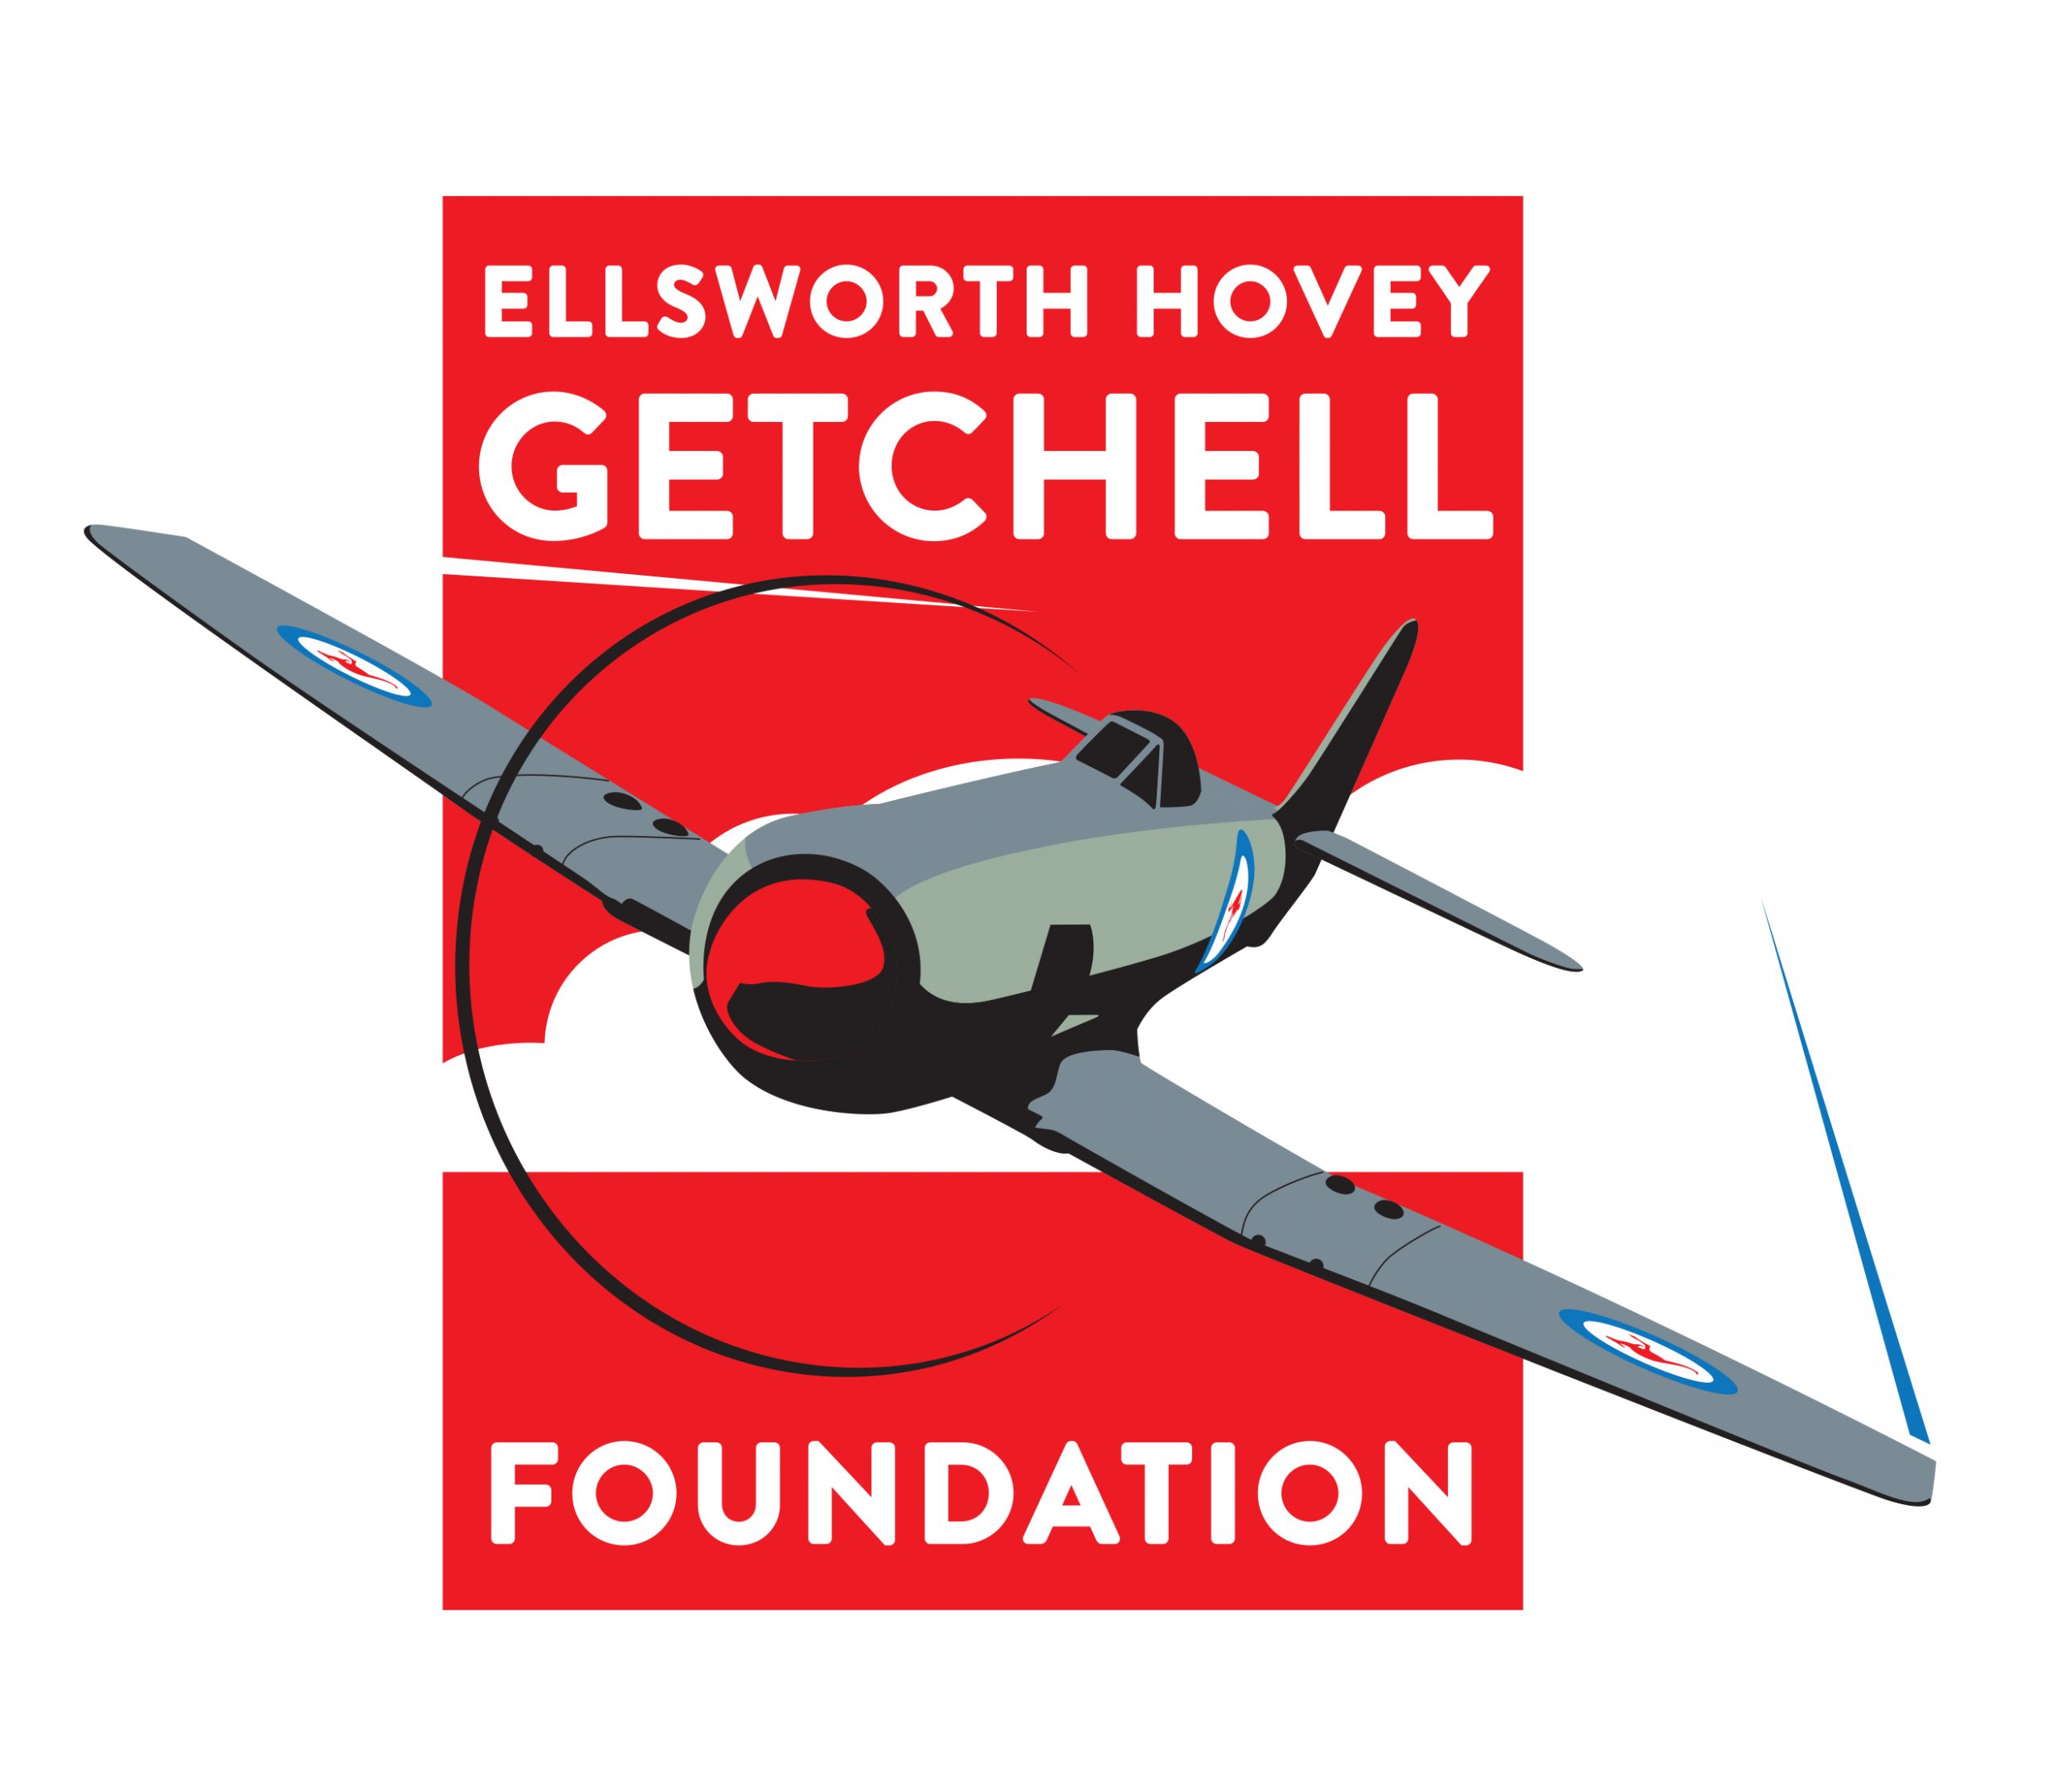 Ellsworth Hovey Getchell Foundation